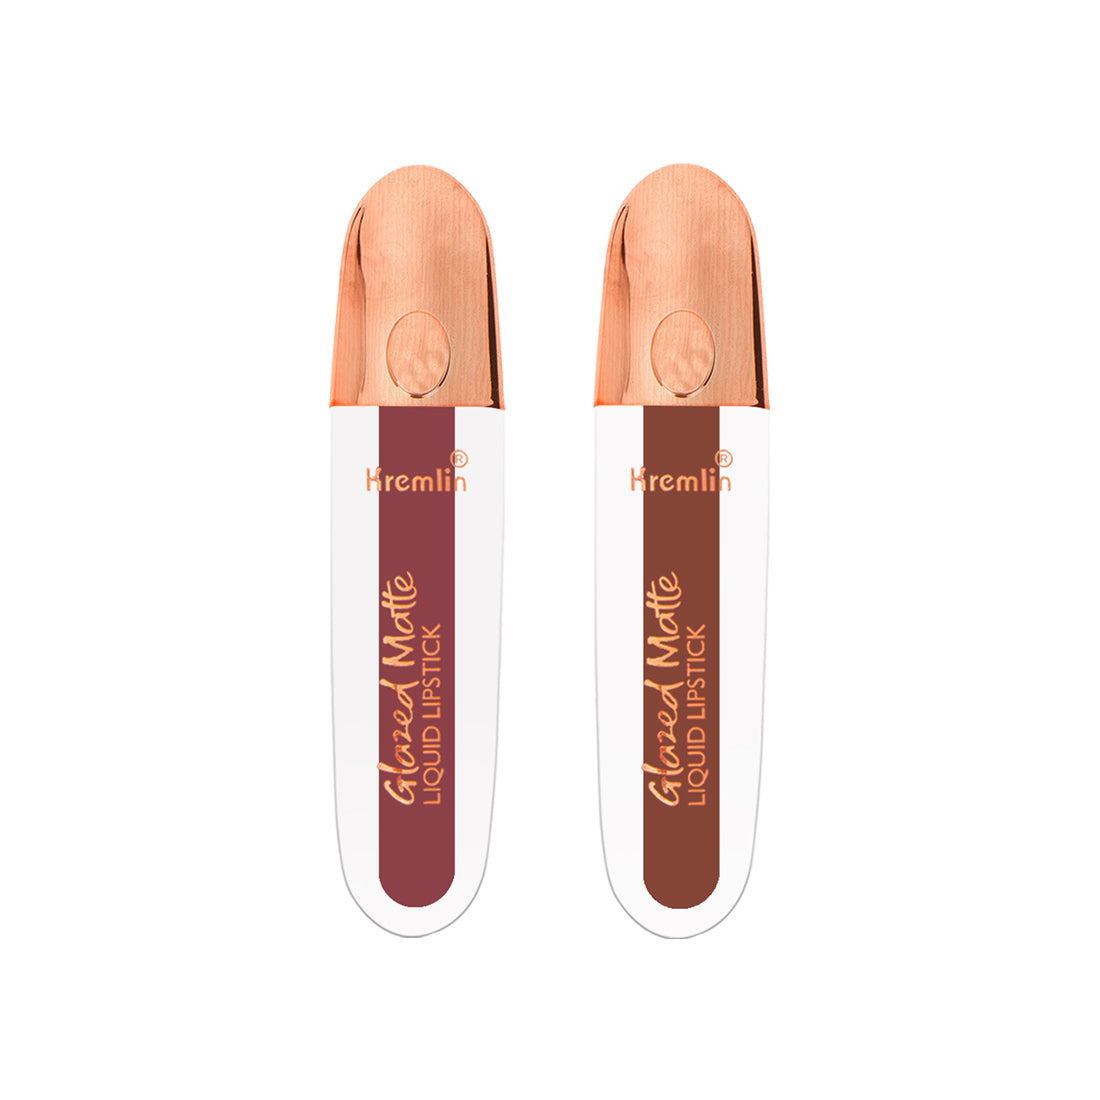 Kremlin Glazed Matte Liquid Lipstick Lips Pack of 2 (Virgin, Normally Nude)